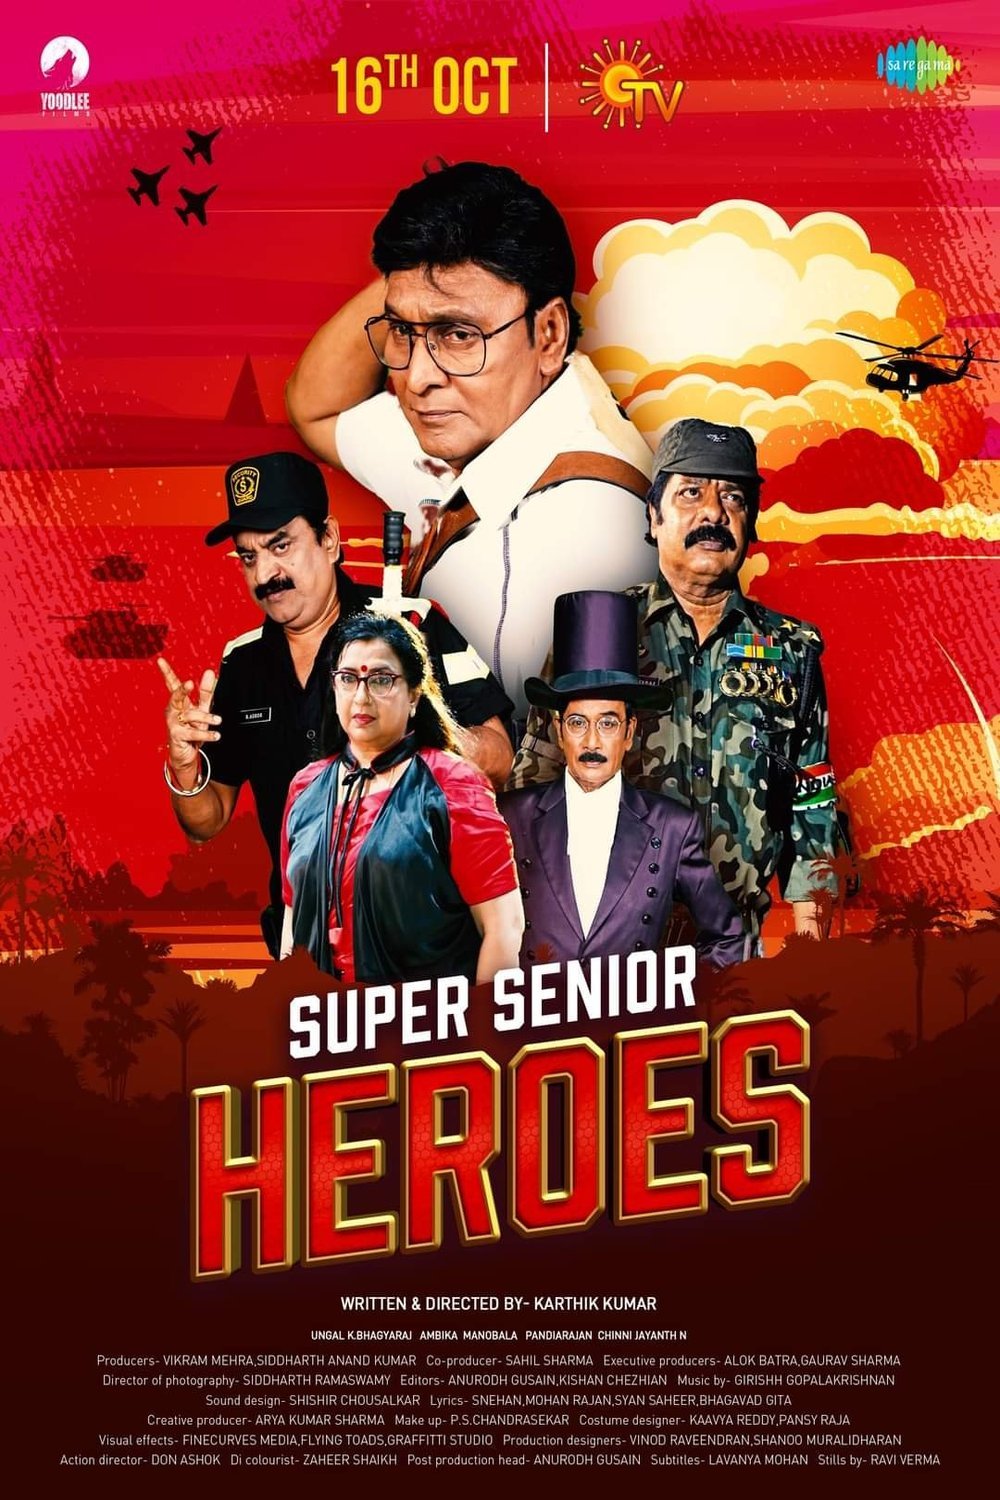 L'affiche originale du film Super Senior Heroes en Tamoul